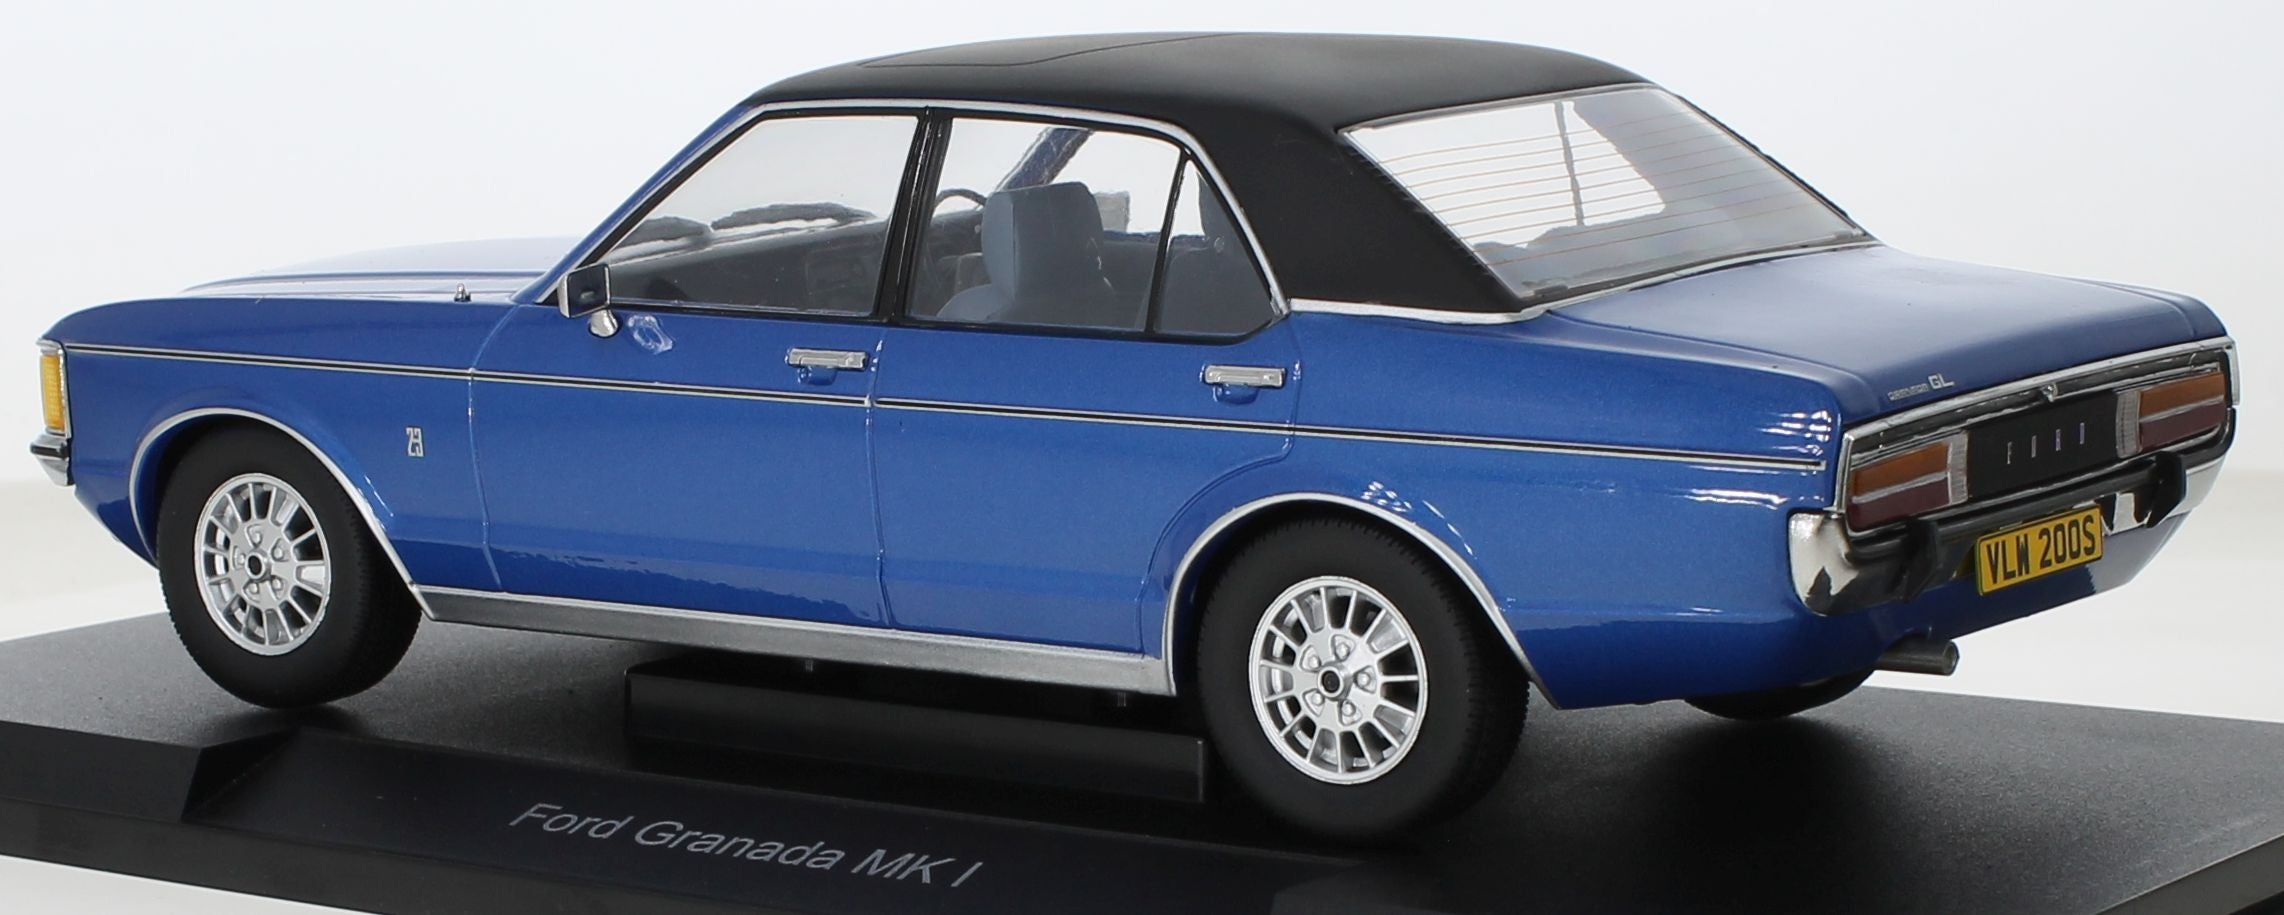 Ford Granada MK1 1975 blue/matt black - 1:18 Scale Diecast Model Car